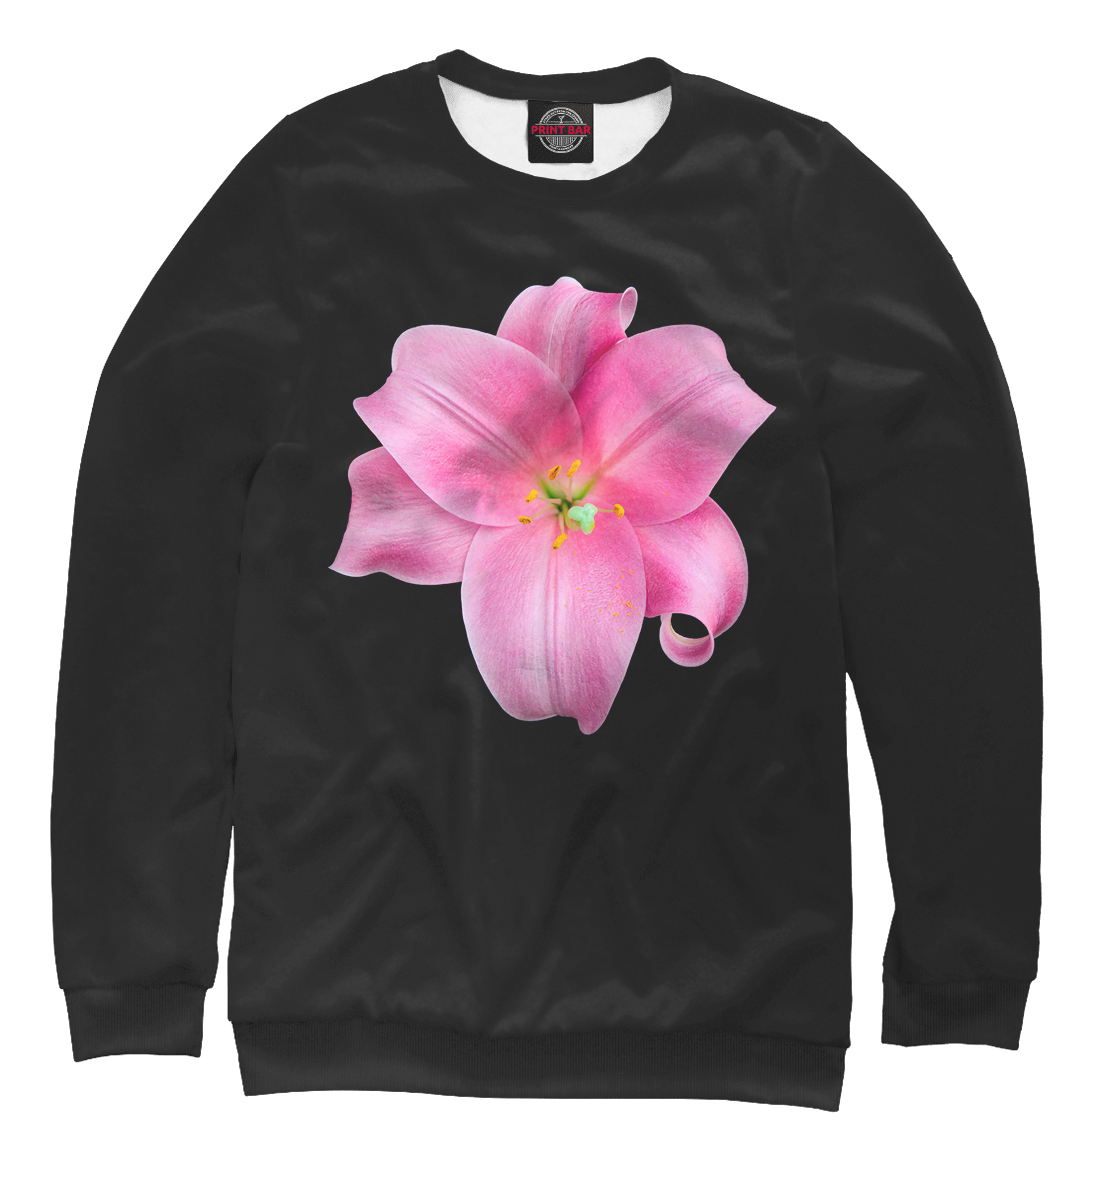 Женский Свитшот с принтом Розовый цветок, артикул CVE-813547-swi-1mp